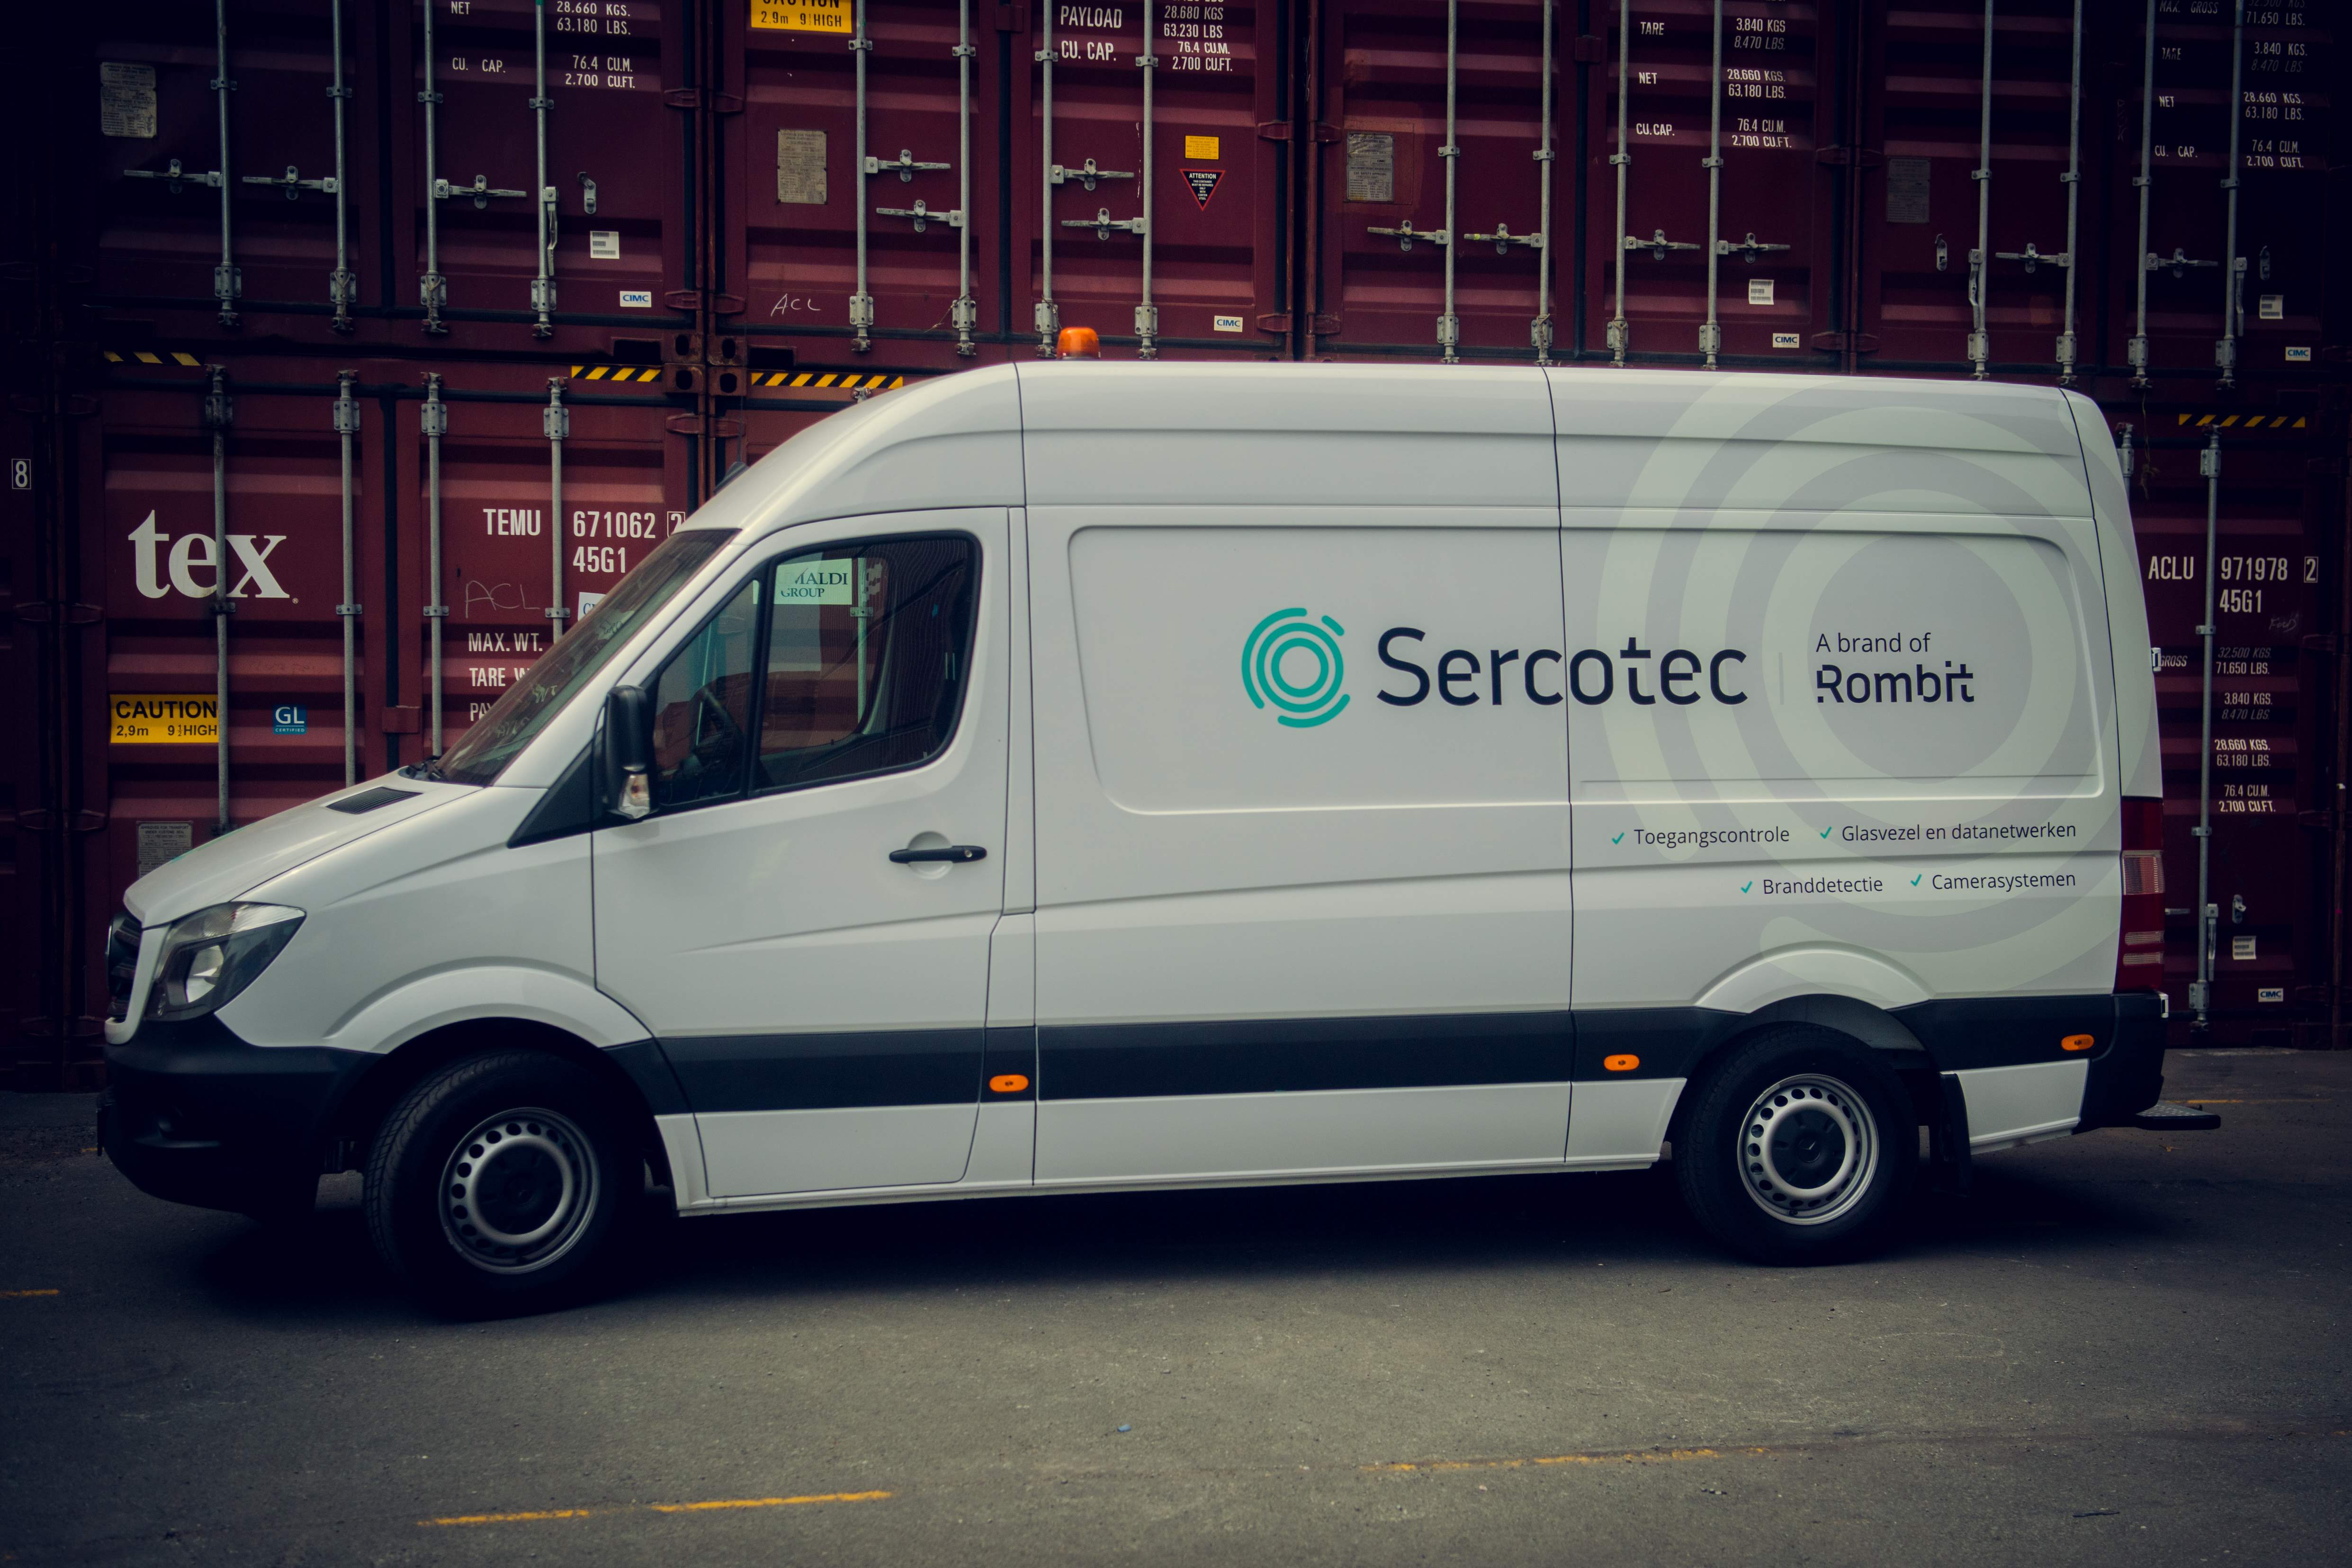 Tech company Rombit acquires security specialist Sercotec